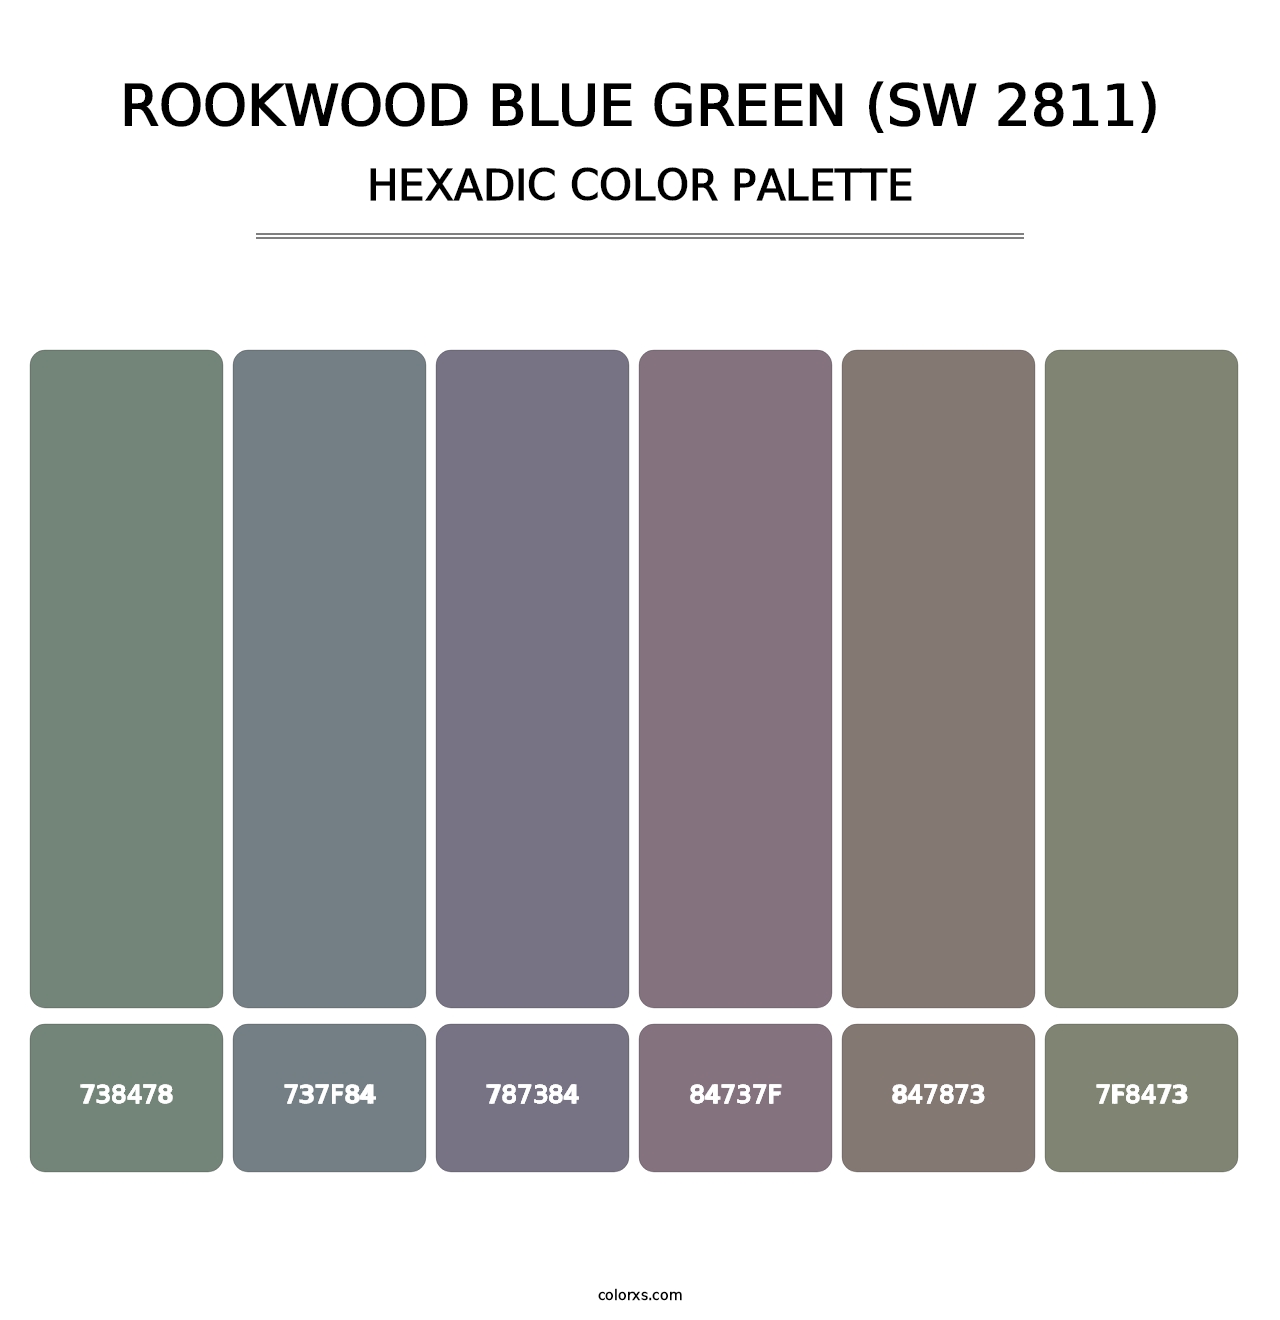 Rookwood Blue Green (SW 2811) - Hexadic Color Palette